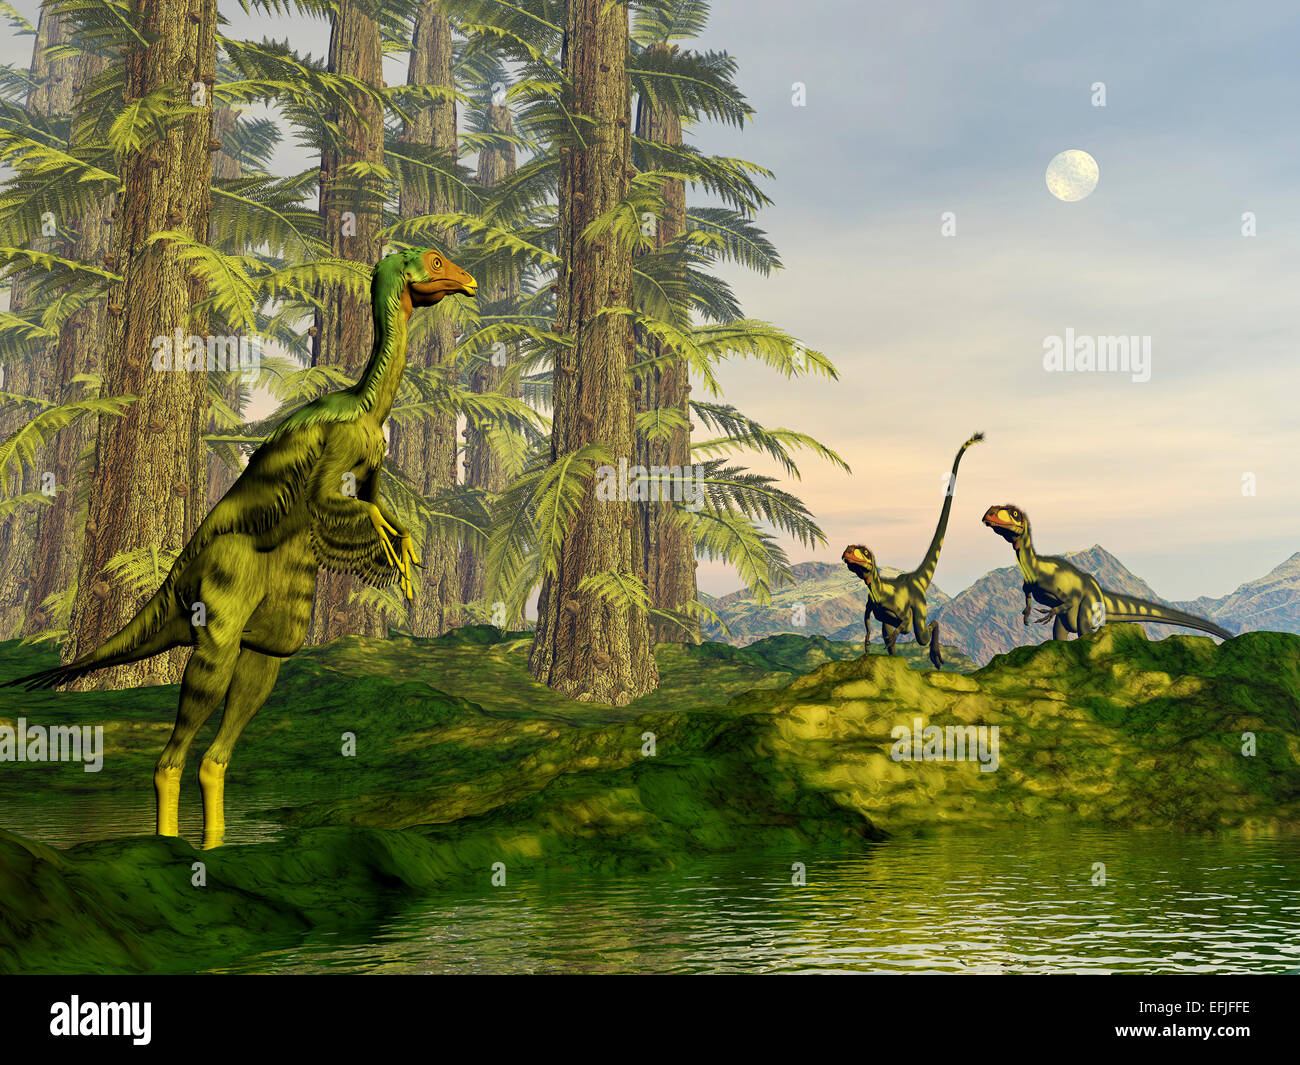 A Caudipteryx watching Dilong dinosaurs approaching approaching amongst Tempskya trees. Stock Photo